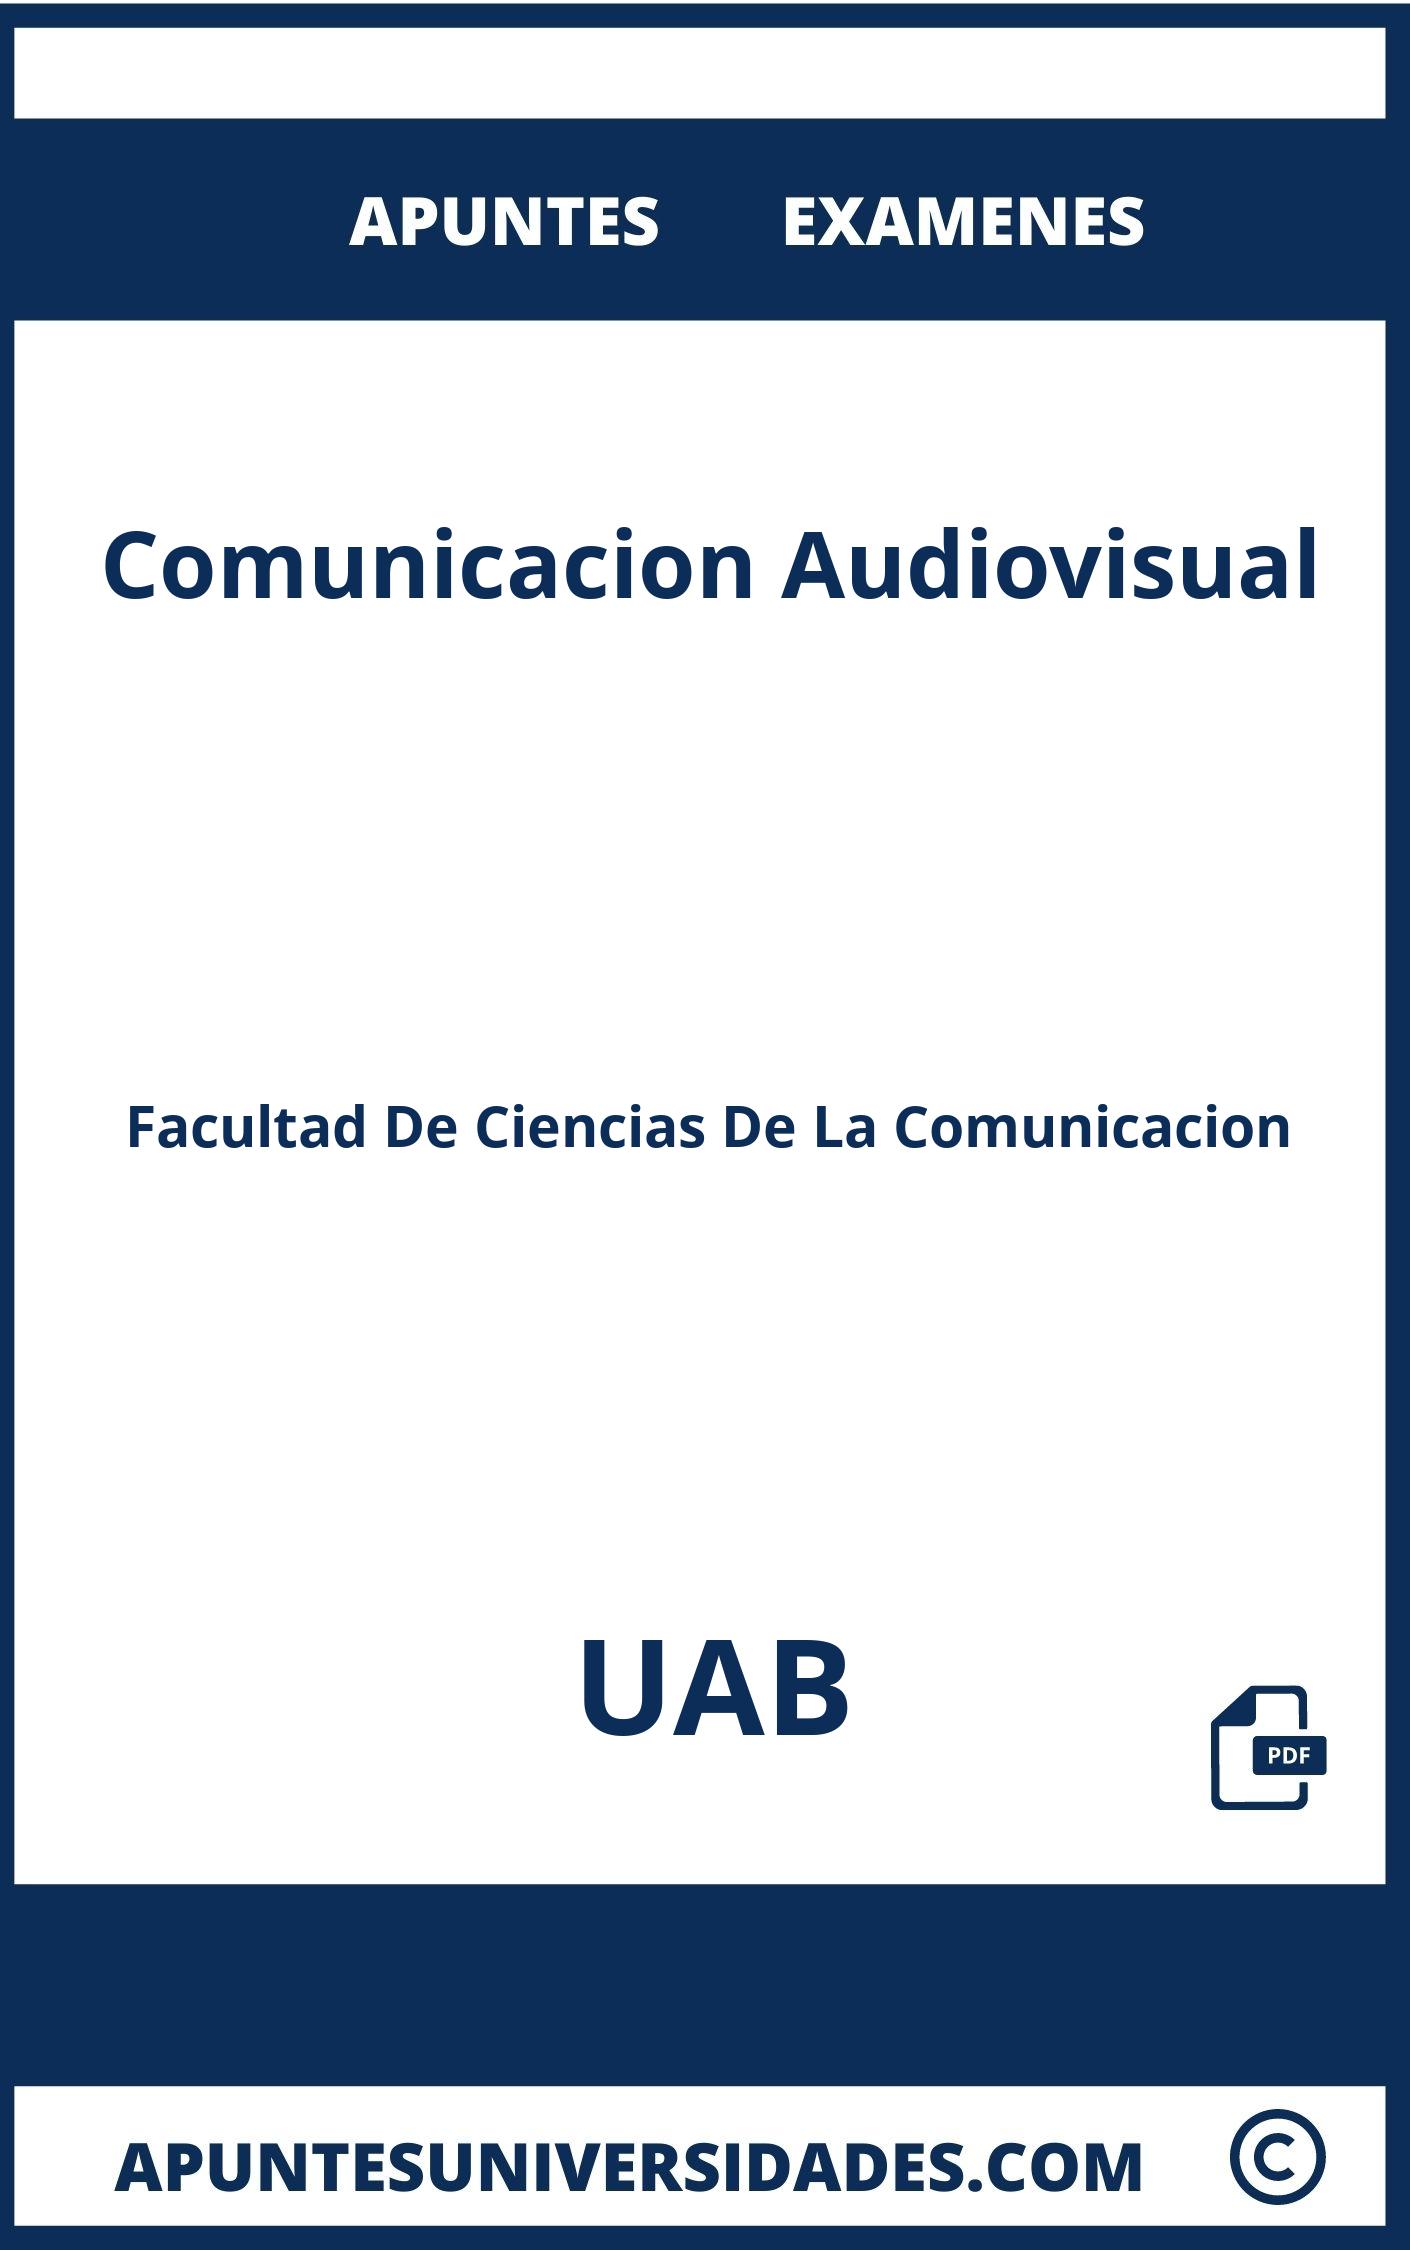 Examenes y Apuntes Comunicacion Audiovisual UAB